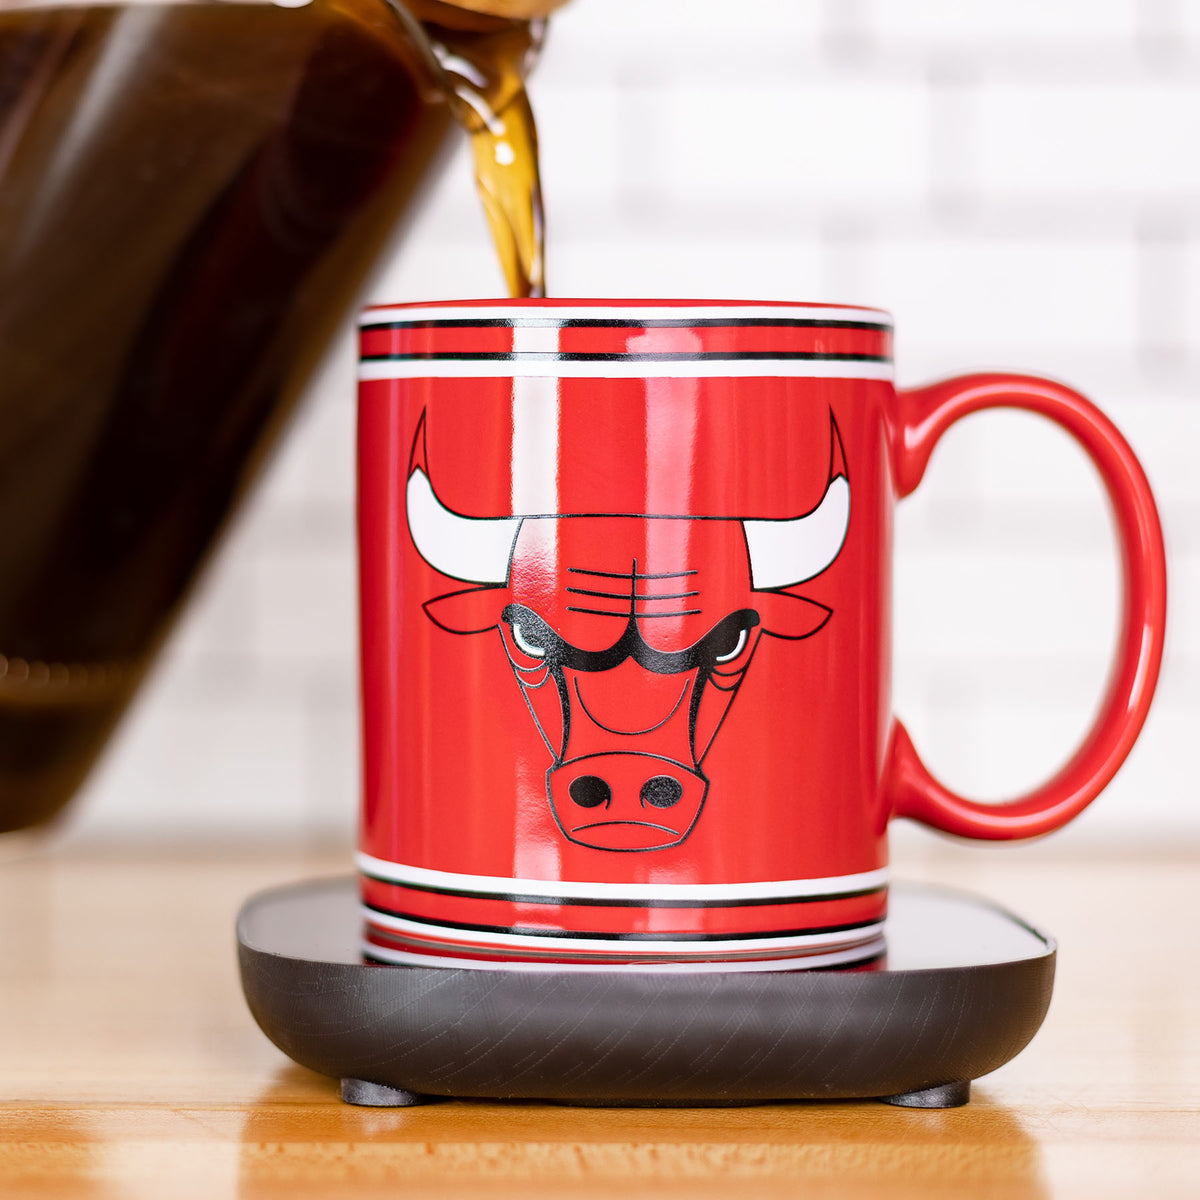 NEW!! Coffee Mug Warmer Touch Switch Tea Drink Warmer Cup Glass Heater Hot  Beverage Mug Pad